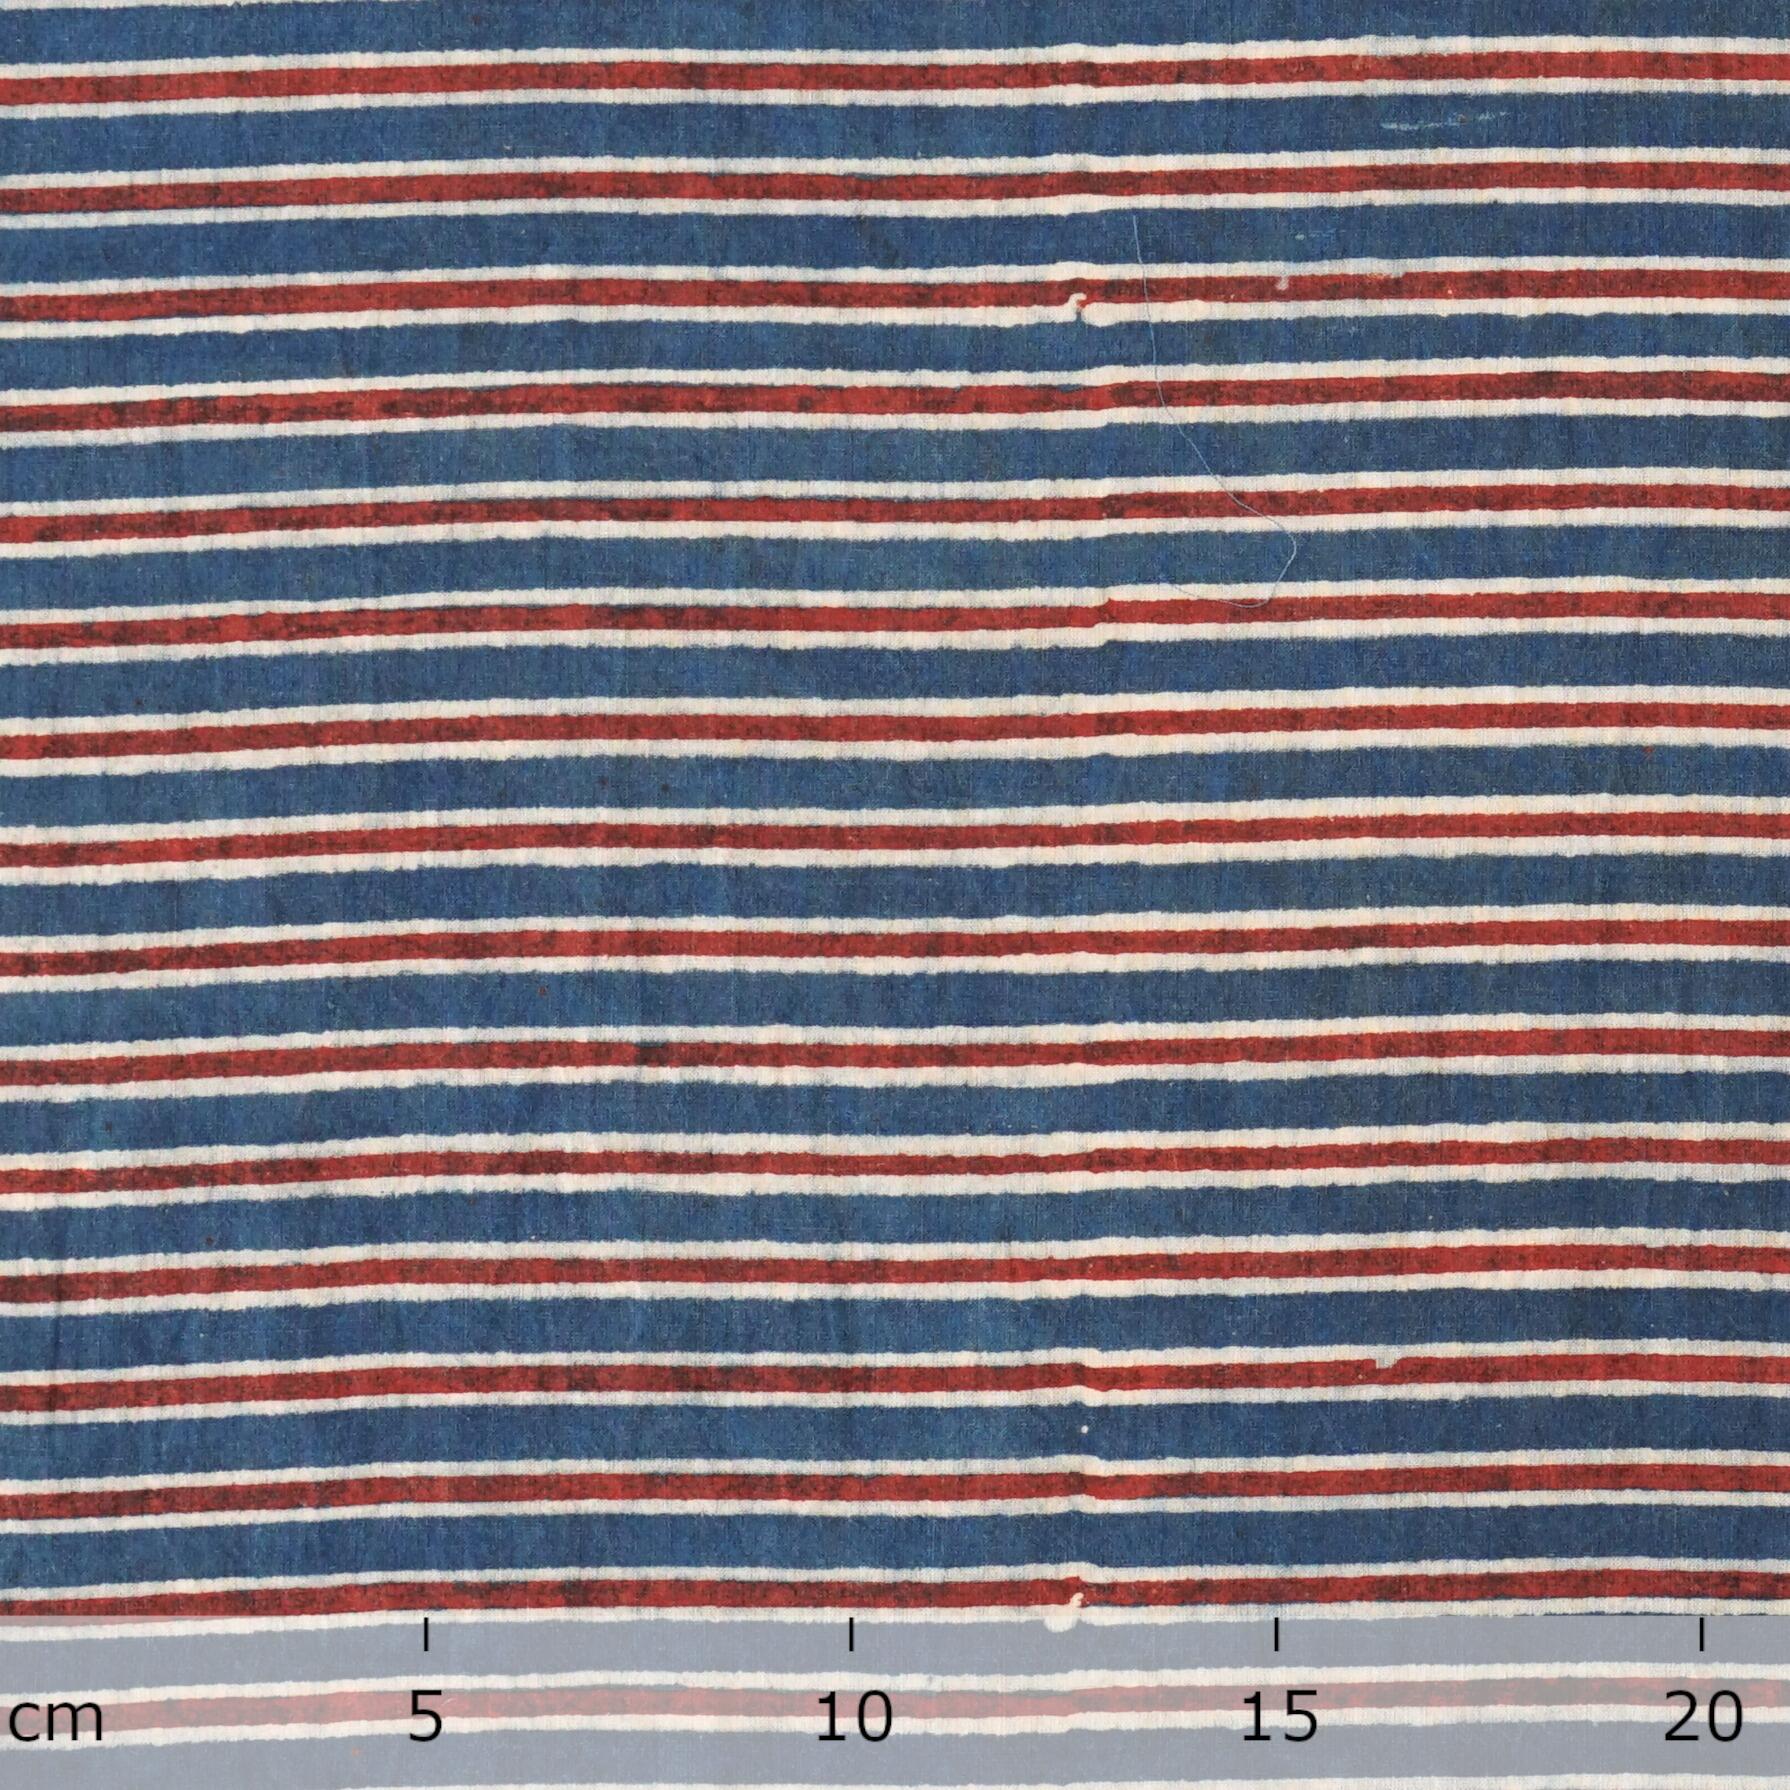 4 - SIK57 - Hand Block-Printed Cotton - Lines Design - Red Alizarin, Indigo Blue, Black Dyes - Ruler